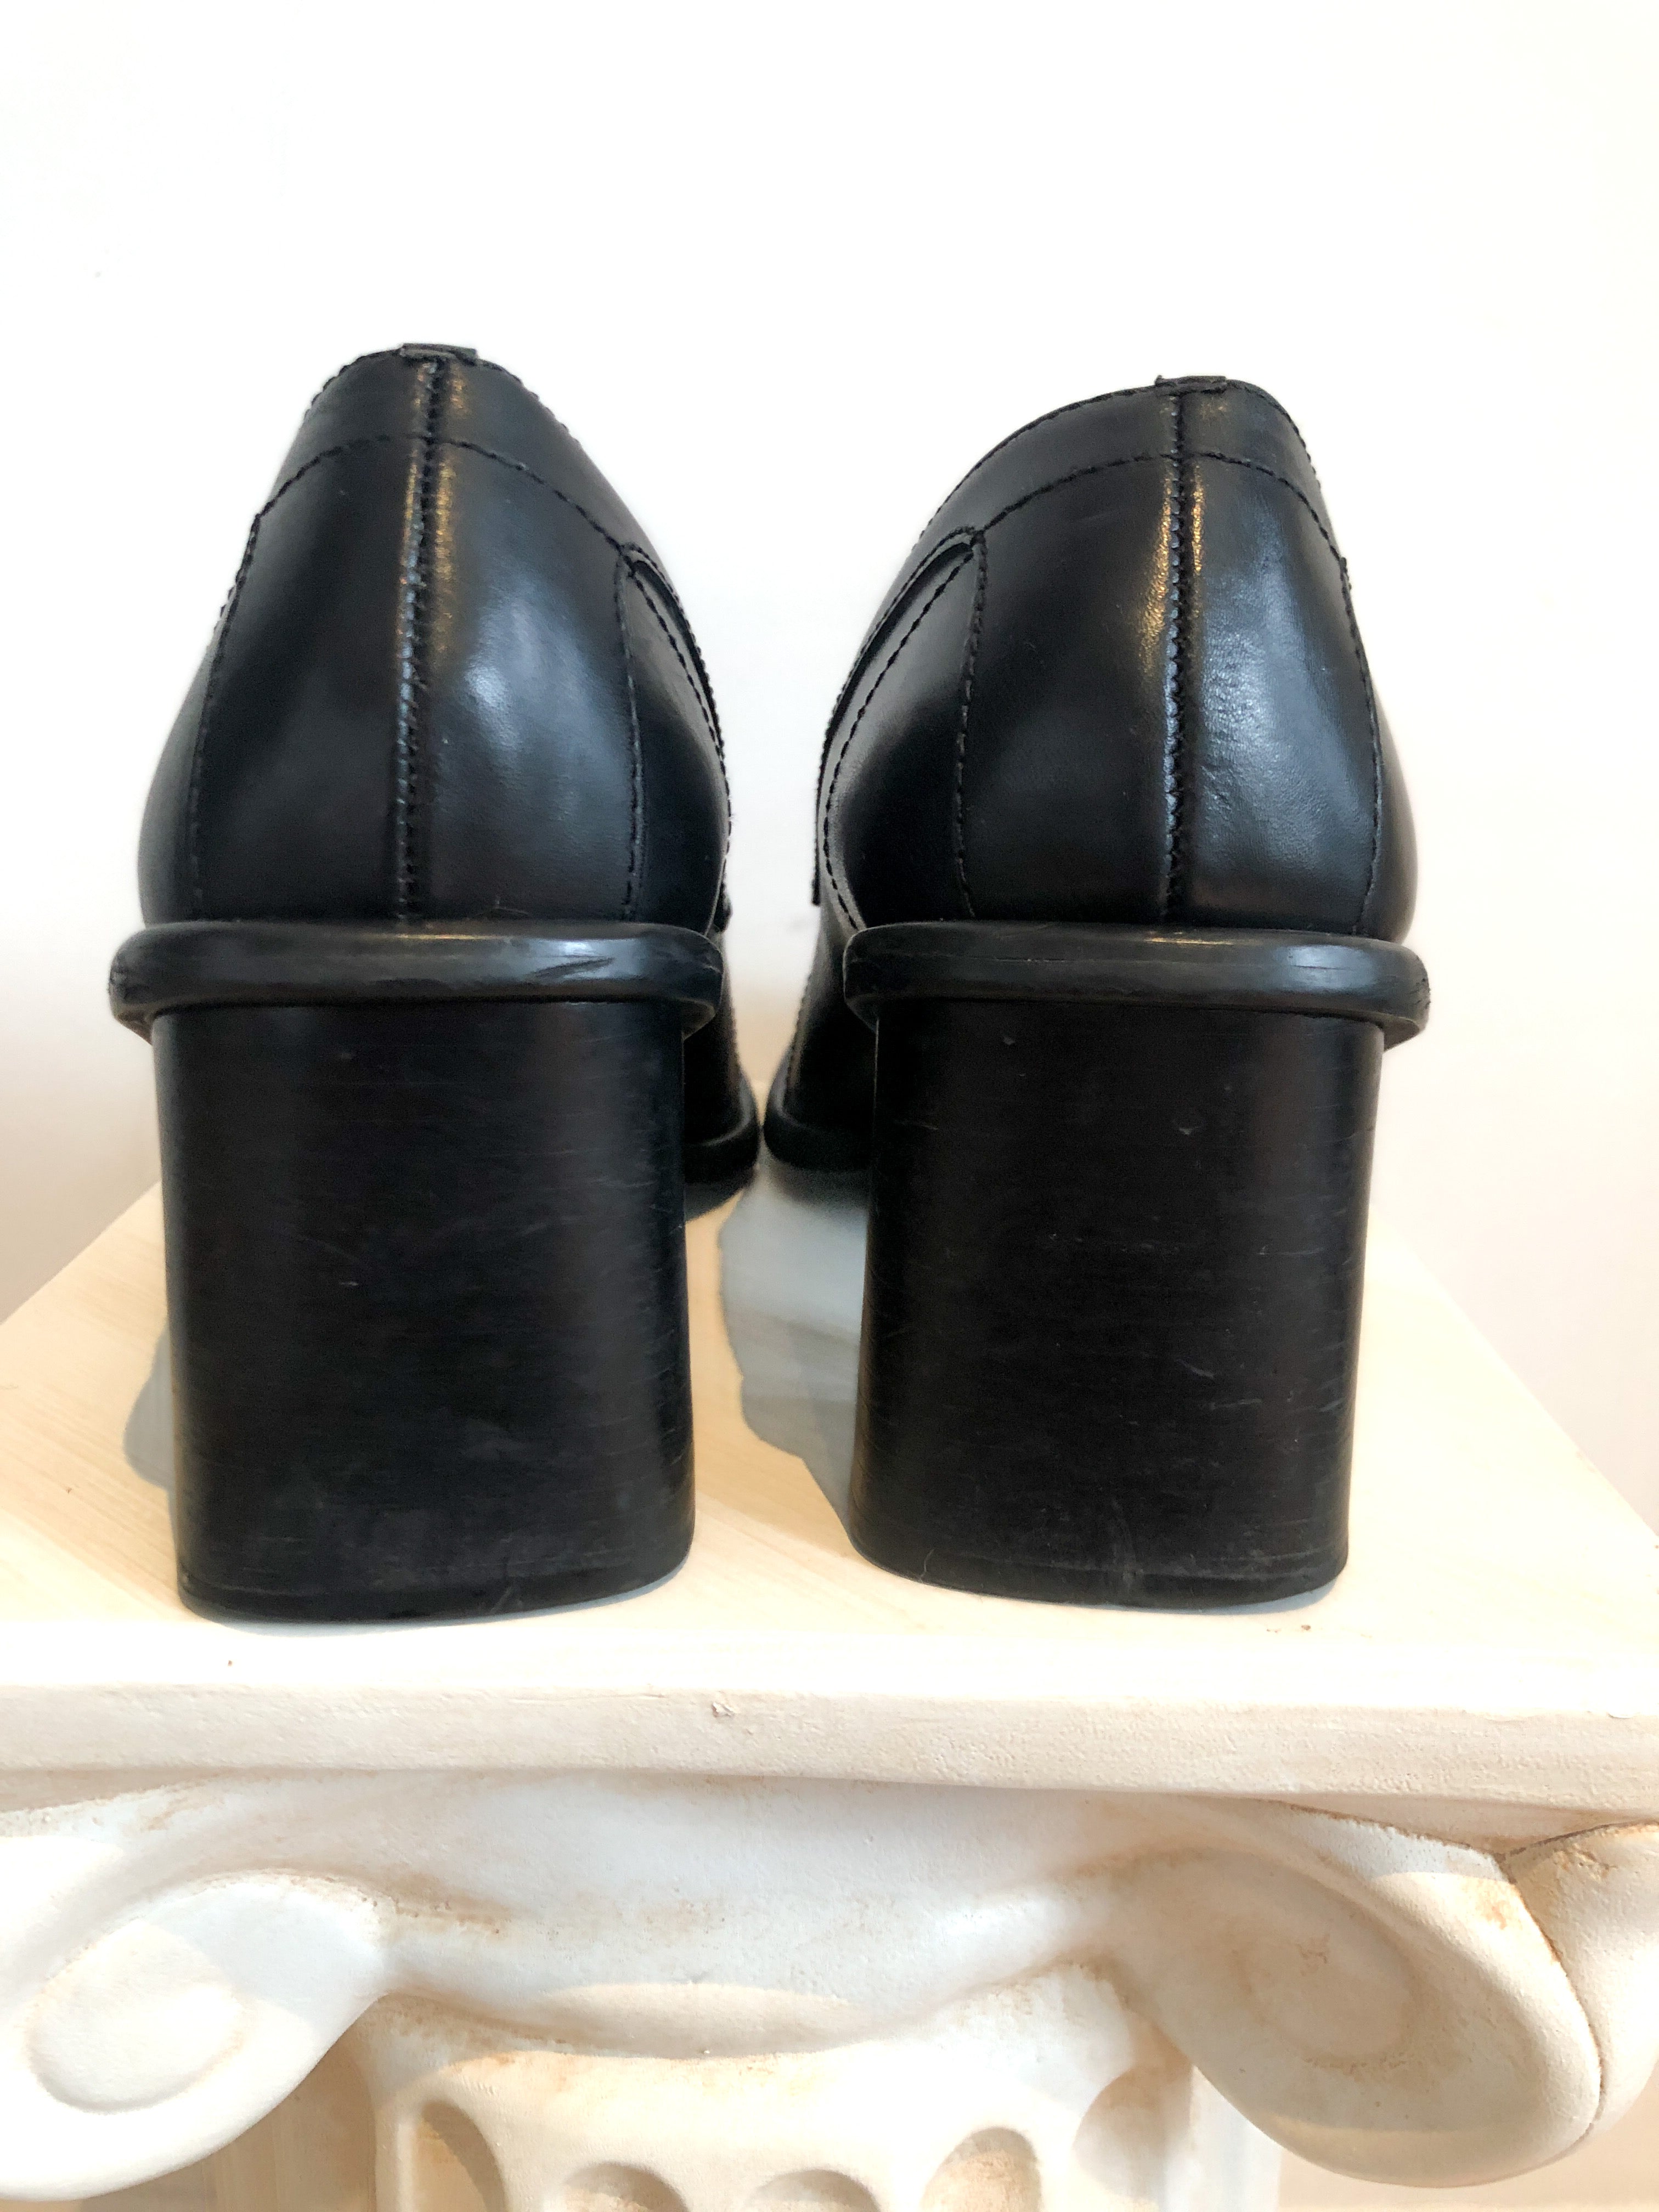 Black Leather Loafer Chunky Heel Shoe, US Size 7 Women's, 1990s Vintage Leather Block Heel by K Studio